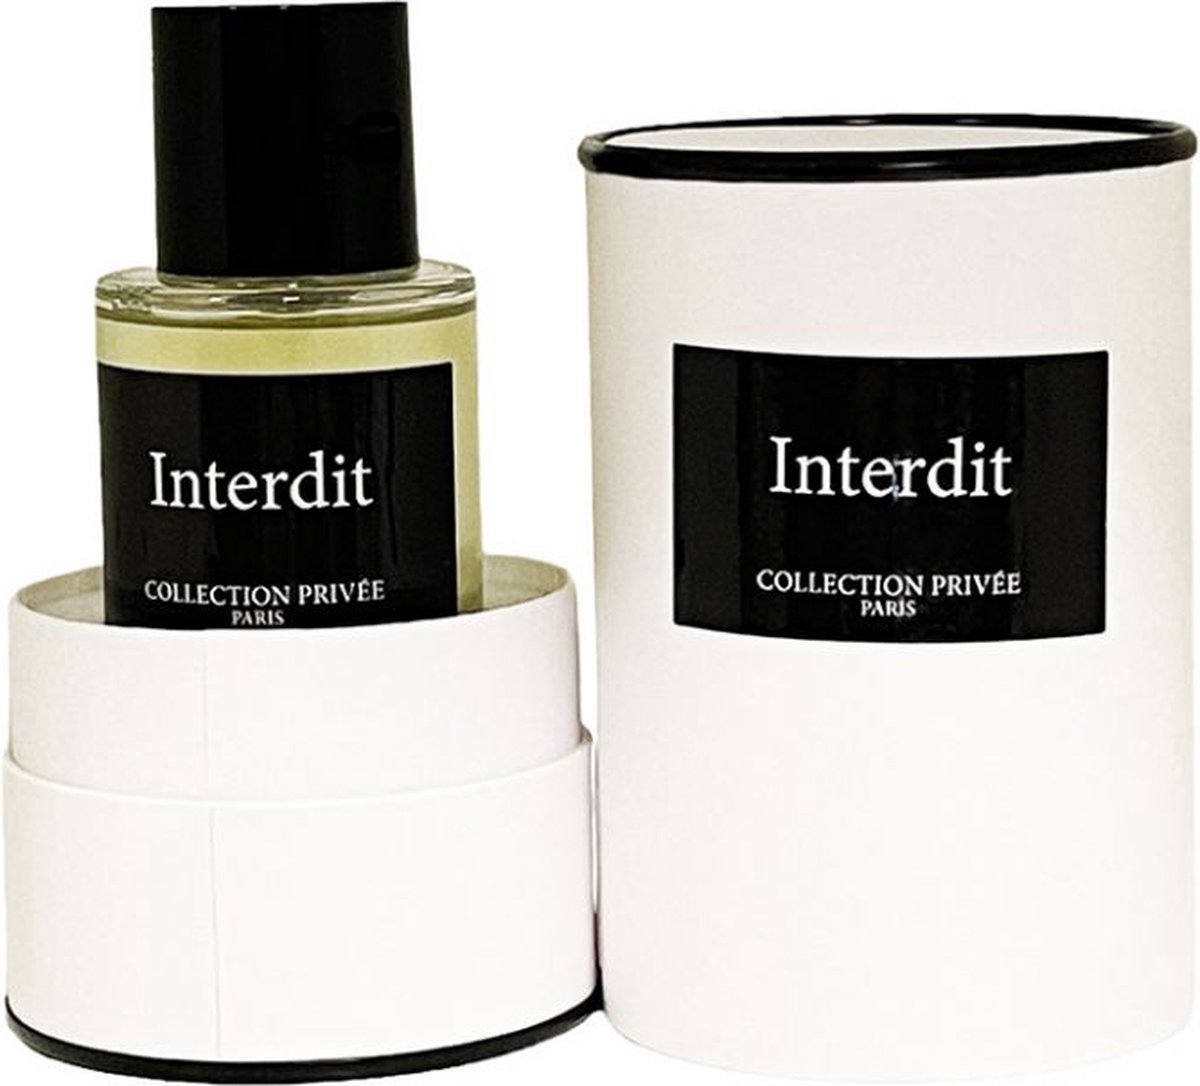 Collection privee paris - Interdit - 50ML Parfum - Dames